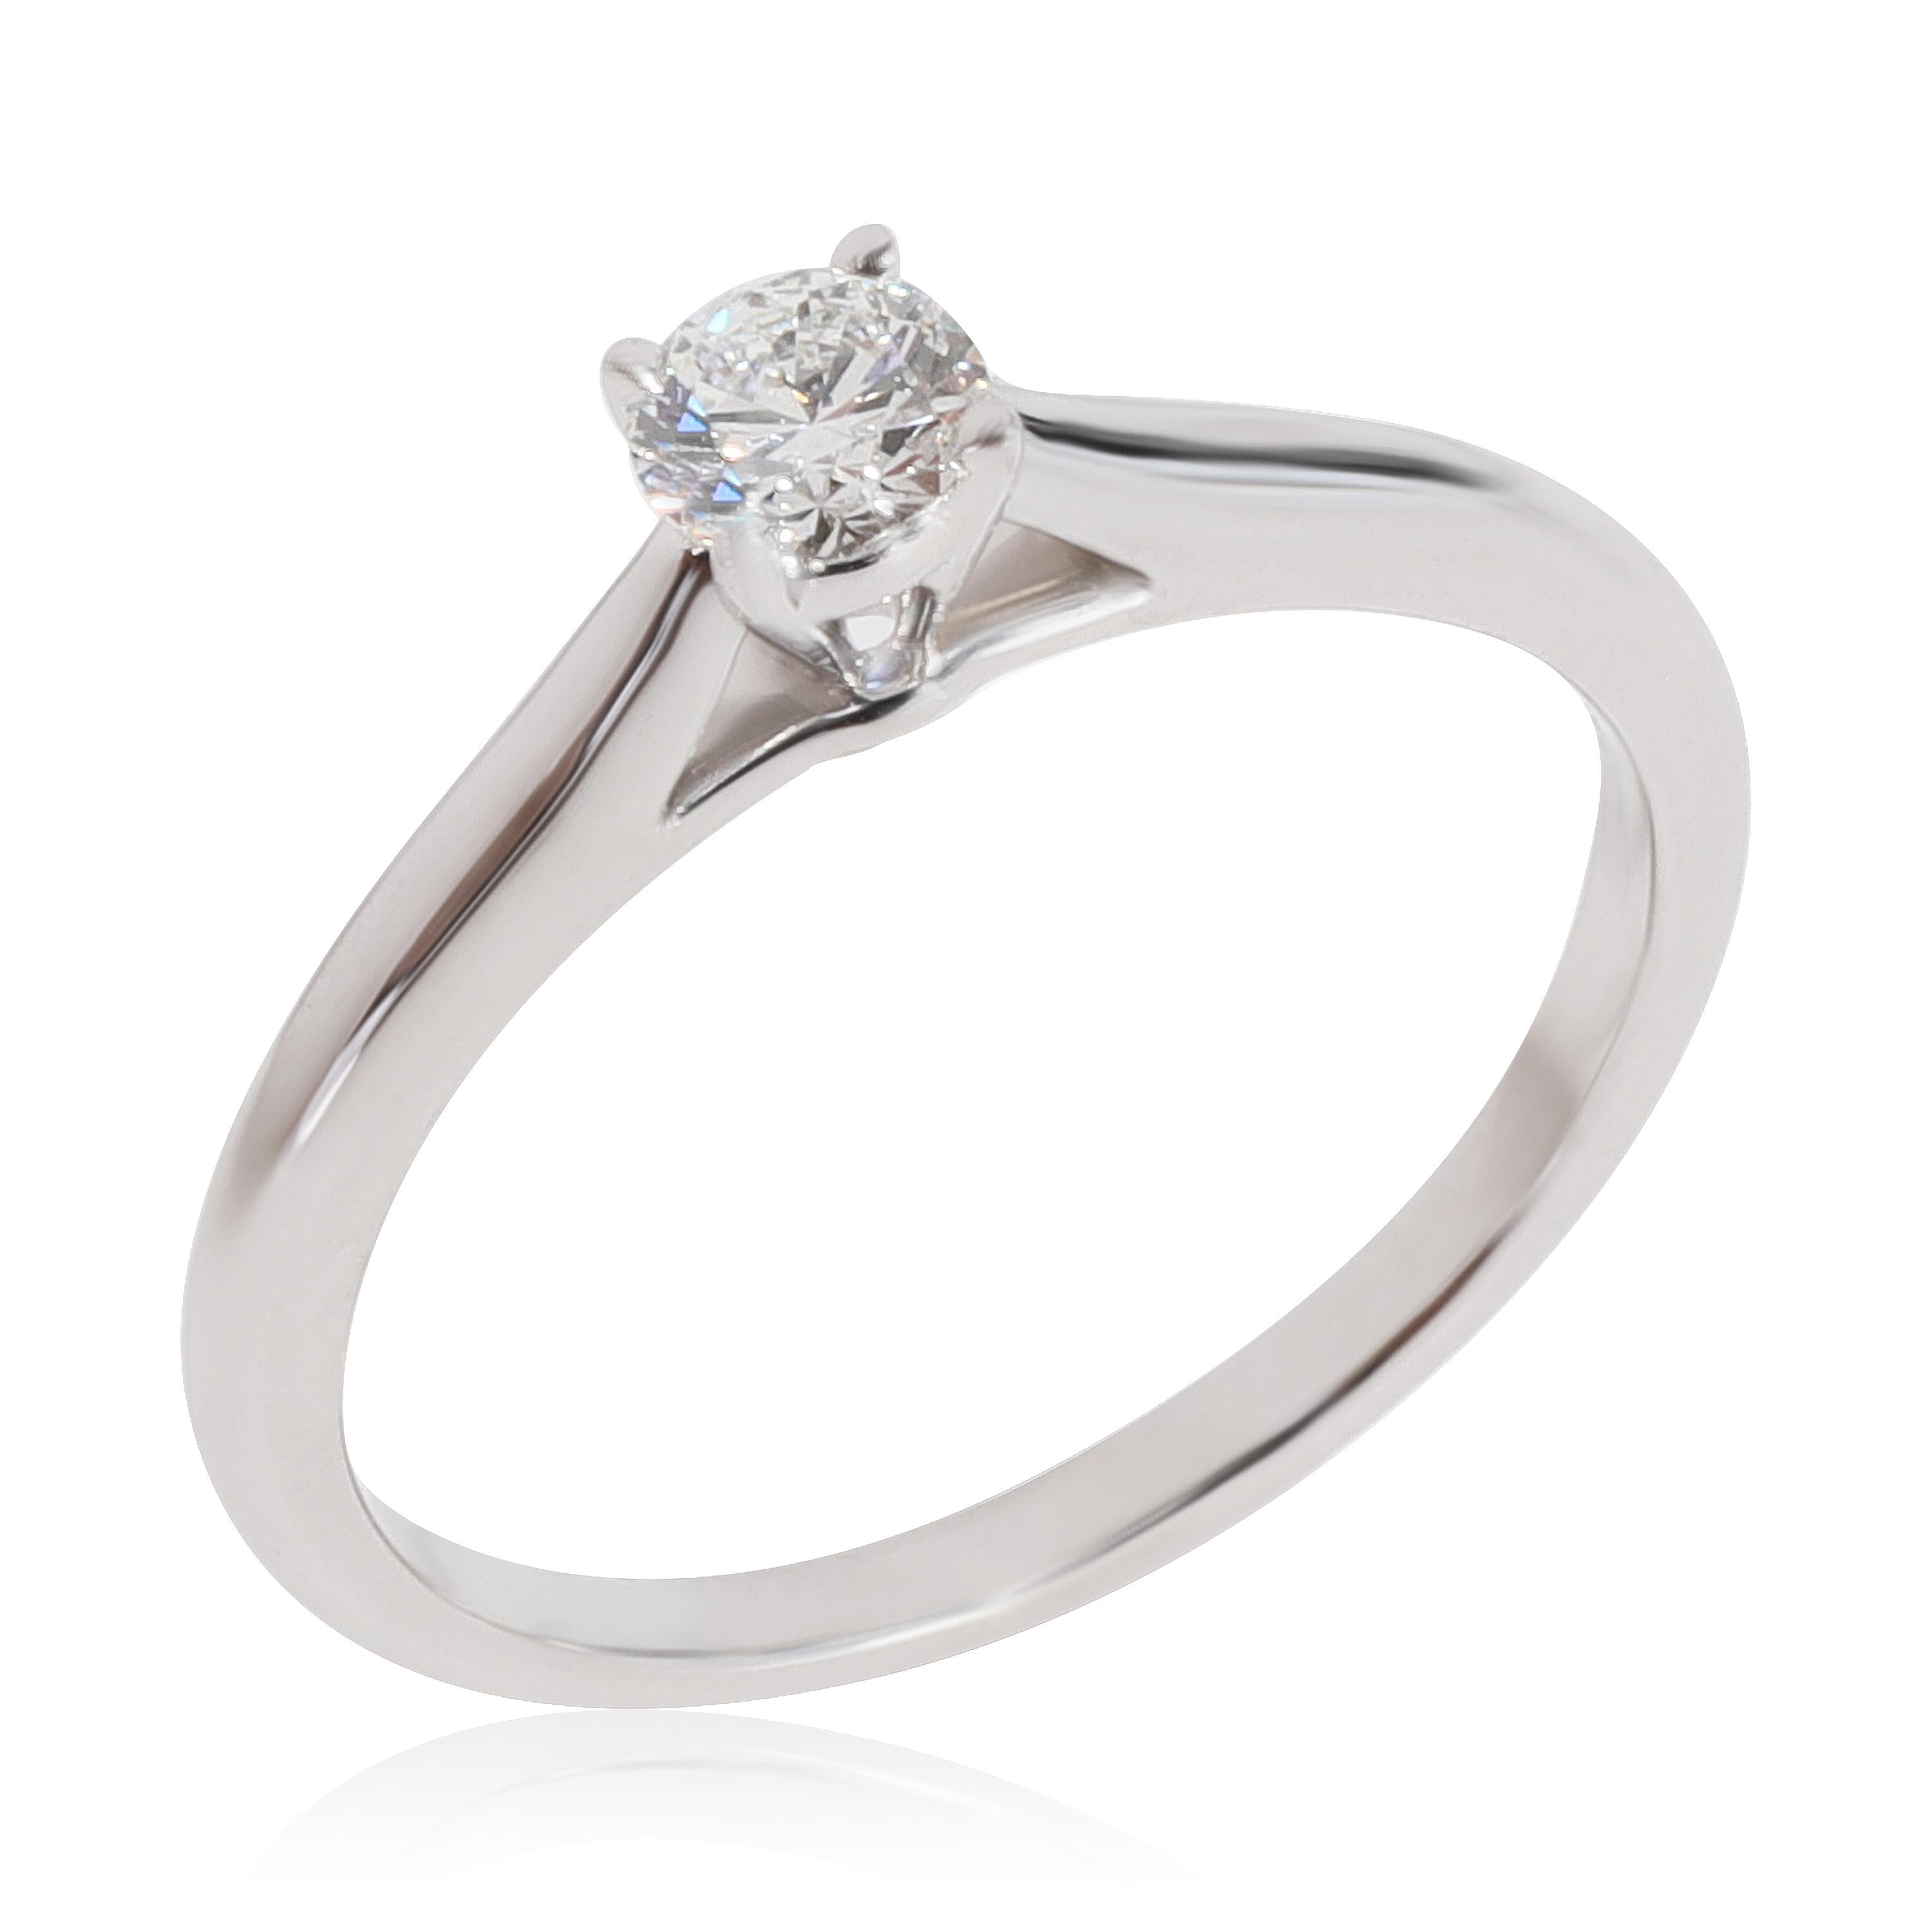 Cartier 1895 Diamond Engagement Ring Ring in Platinum E VVS1 0.21 CTW

PRIMARY DETAILS
SKU: 117544
Listing Title: Cartier 1895 Diamond Engagement Ring Ring in Platinum E VVS1 0.21 CTW
Condition Description: Retails for 2900 USD. In excellent